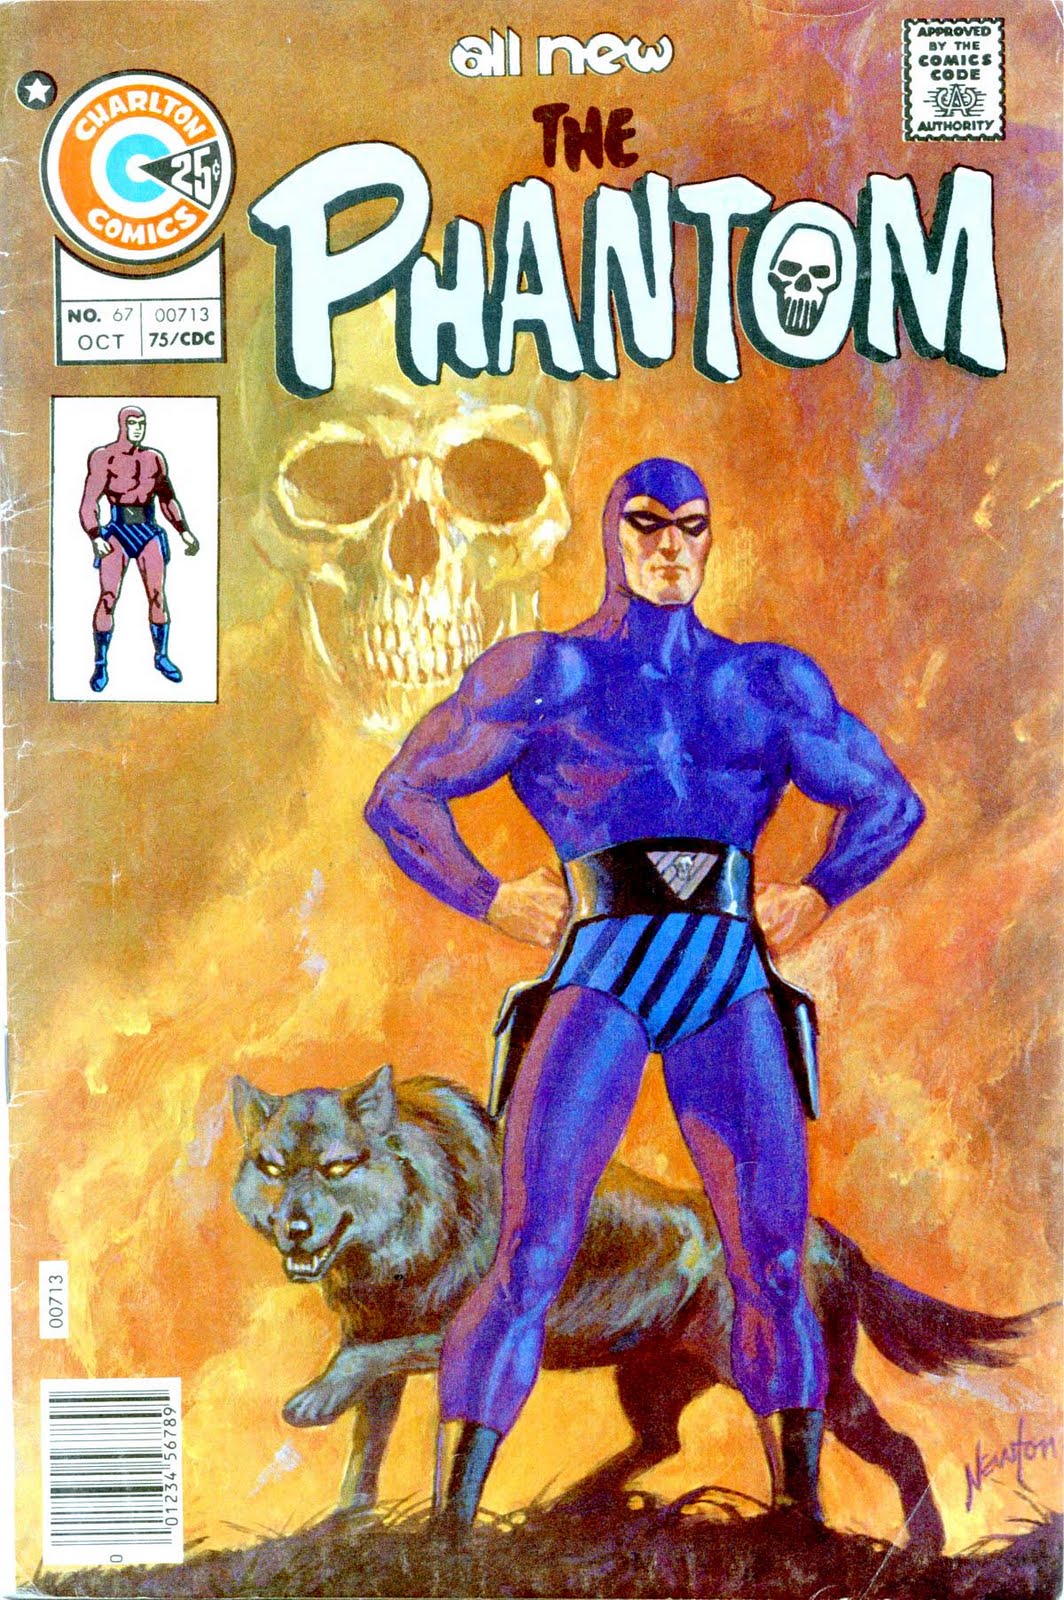 The Phantom v2 #67 charlton comic book cover art by Don Newton